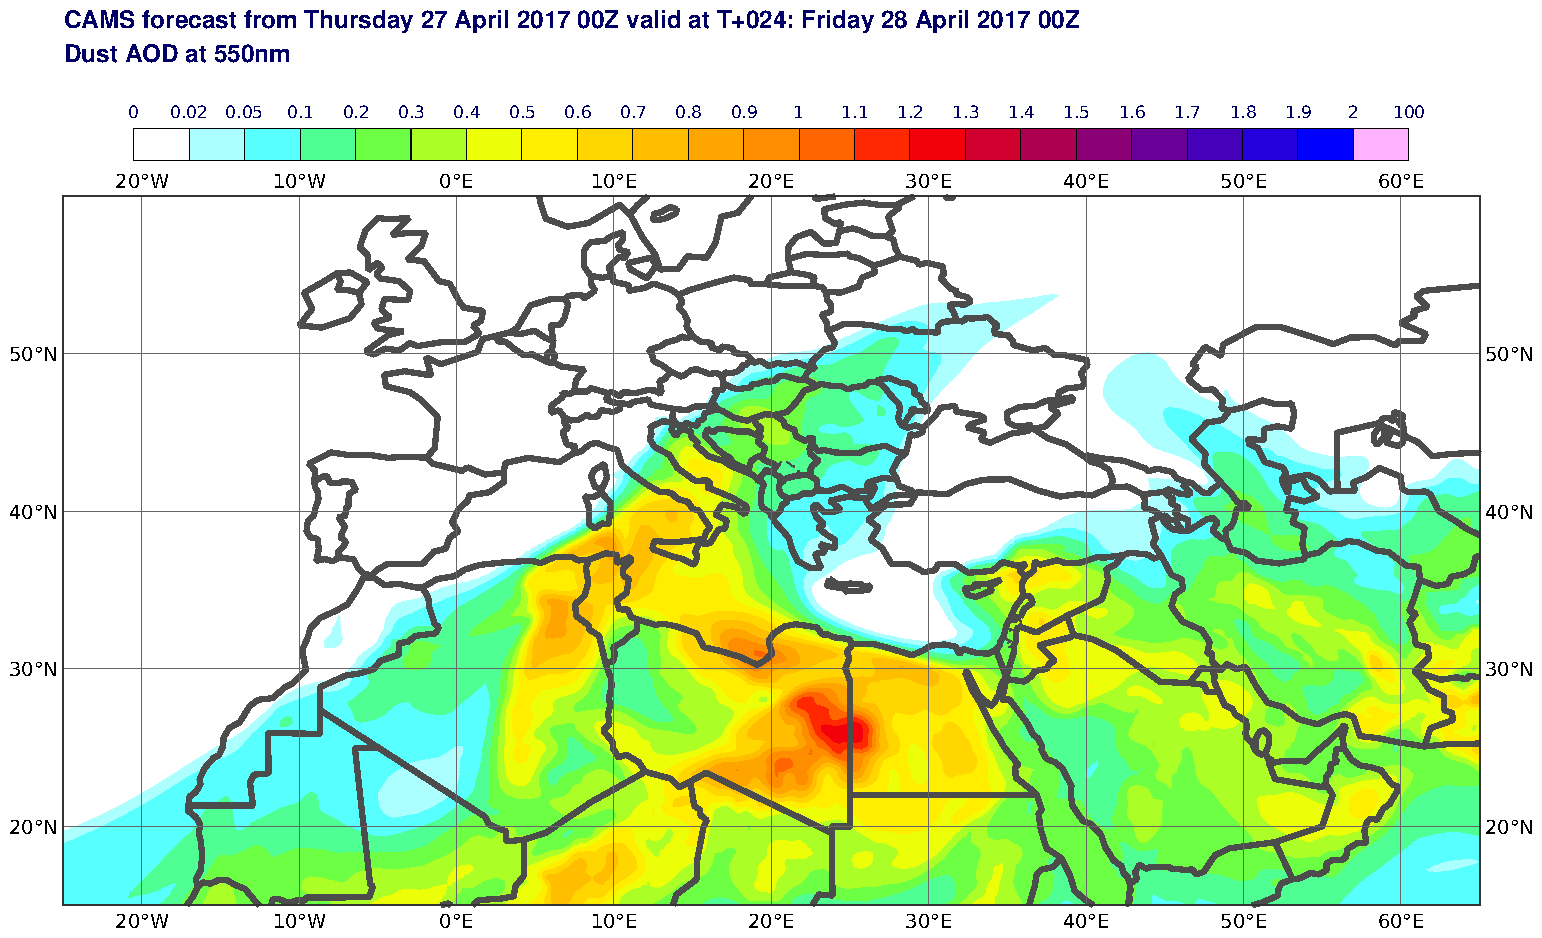 Dust AOD at 550nm valid at T24 - 2017-04-28 00:00